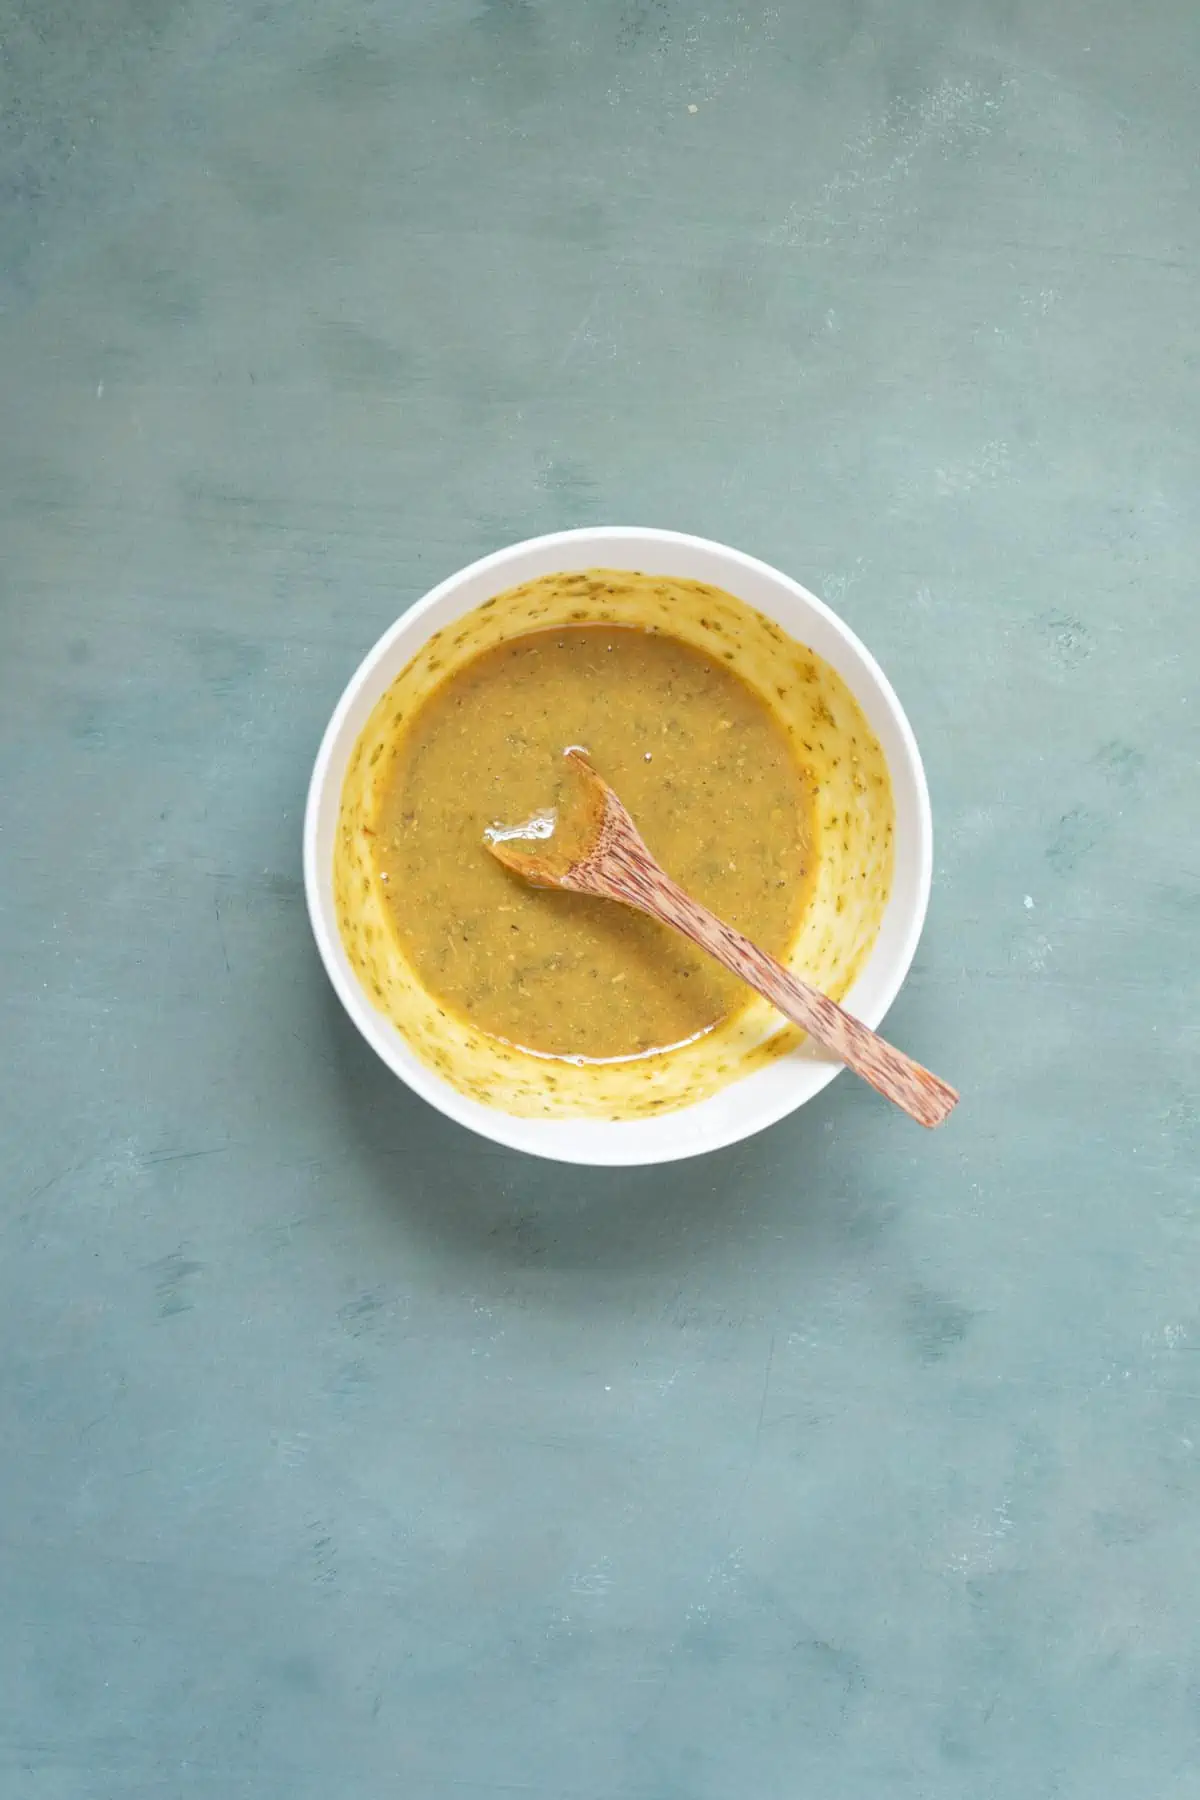 Dijon mustard, honey, and dried oregano in a small bowl.